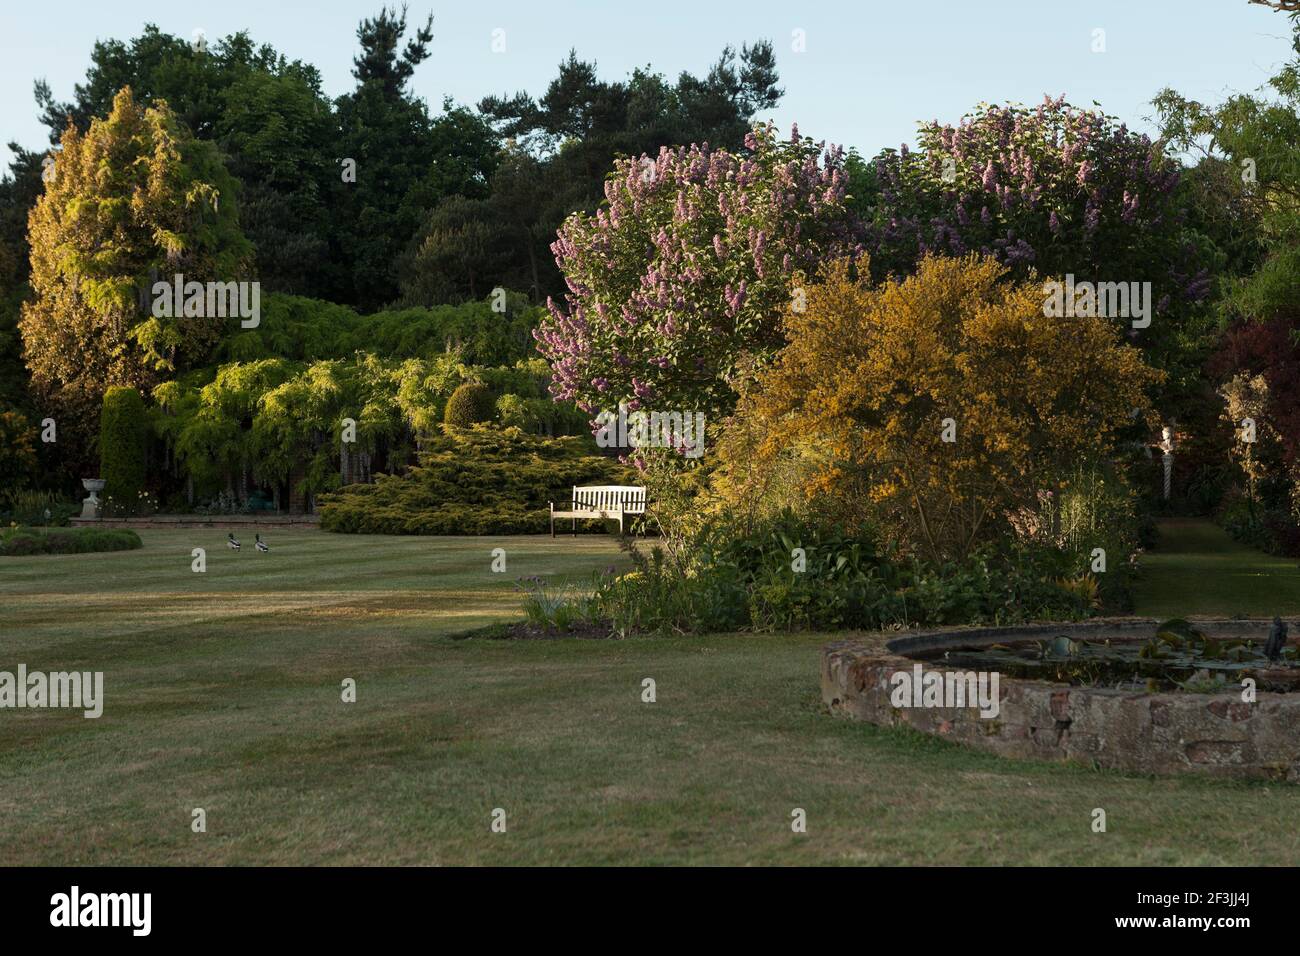 At the far end of the main lawn: Syringa vulgaris 'Decaisne', Lilac, Broom, Juniperus x pfitzeriana 'Aurea' and Wisteria floribunda 'Macrobotrys',  ph Stock Photo